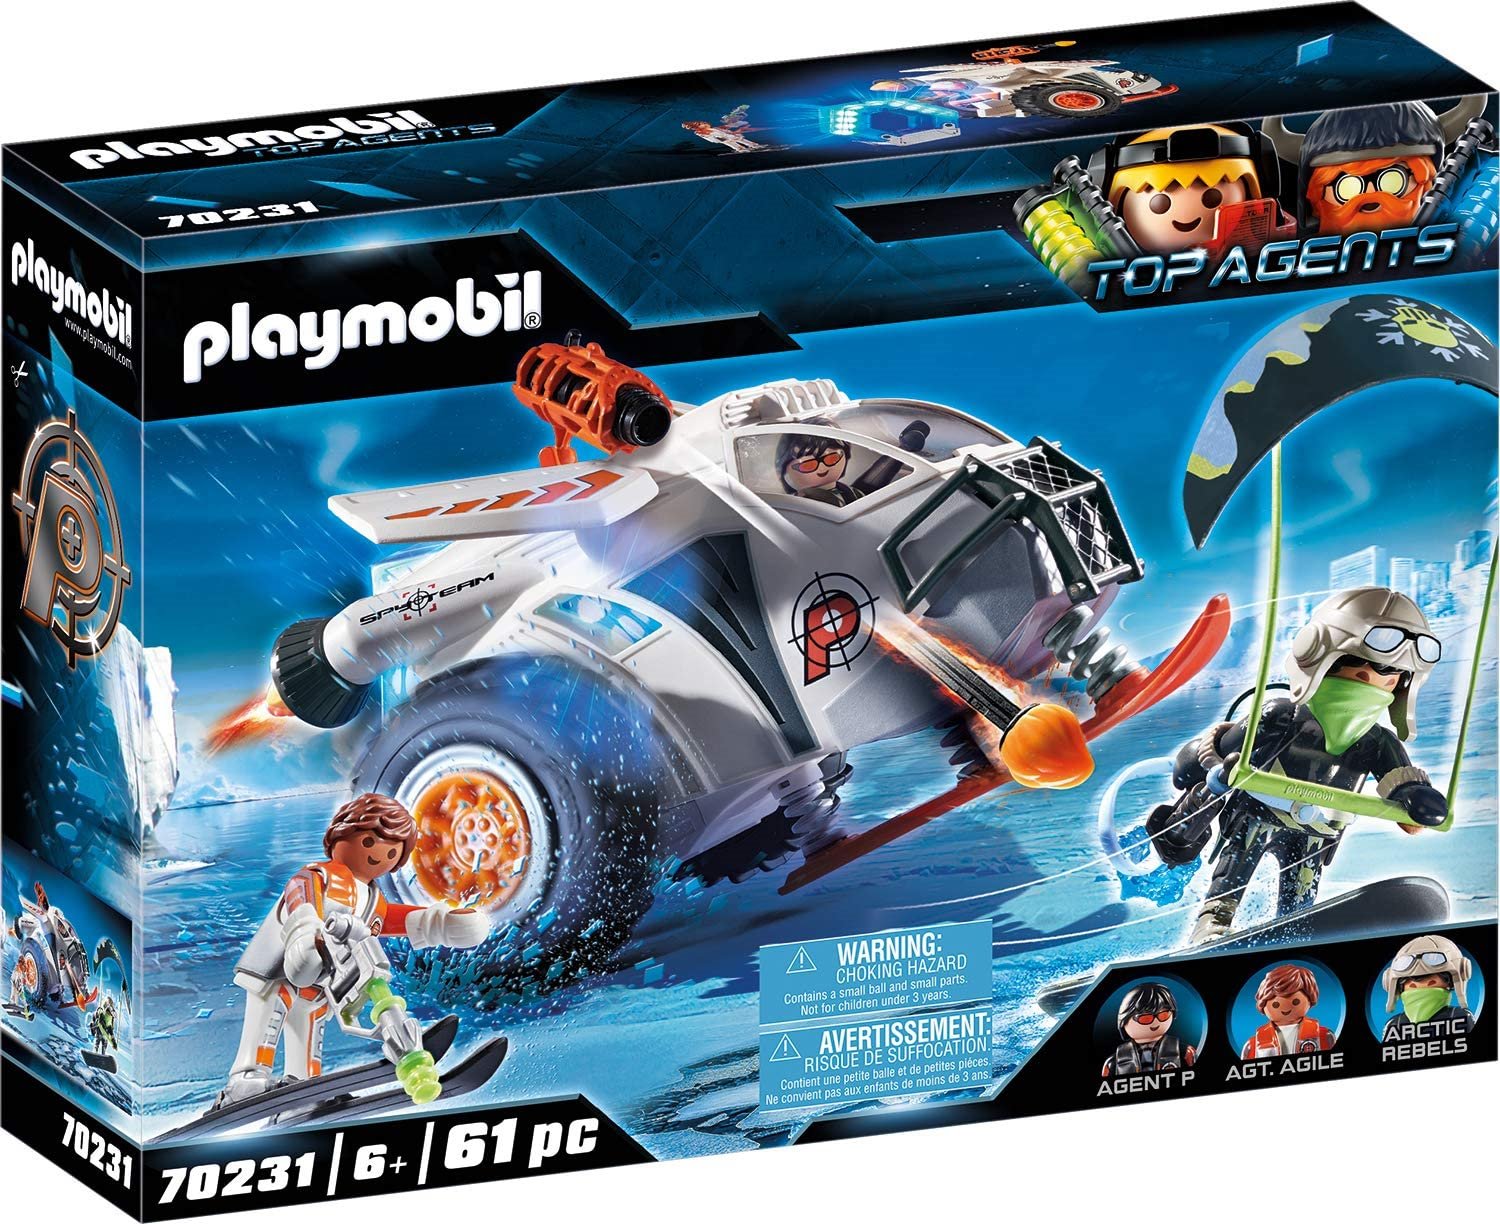 Playmobil - Top Agents 70231 Spy Team sněžný kluzák